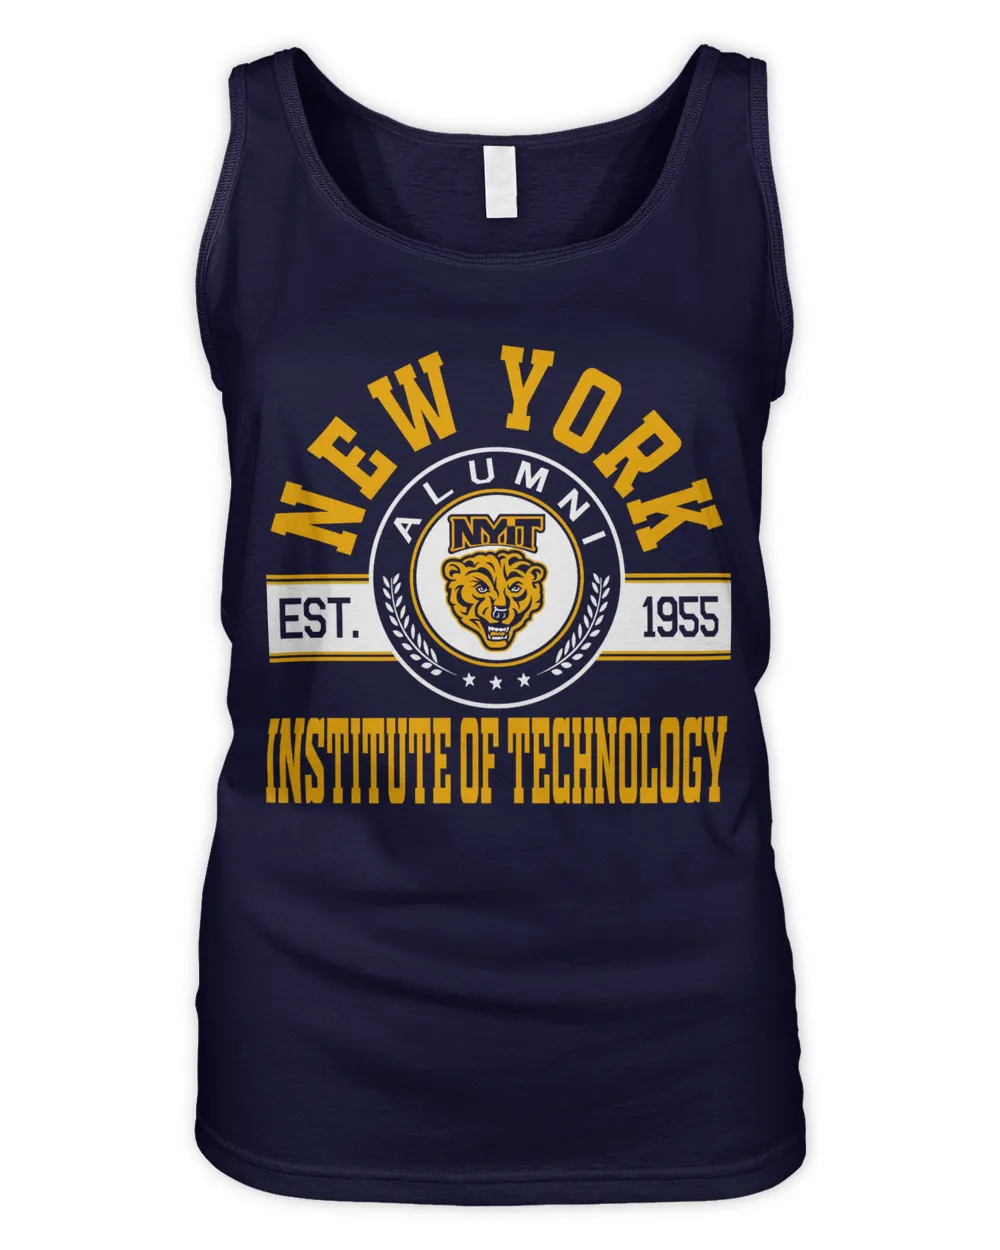 New York Institute of Technology Lgo2